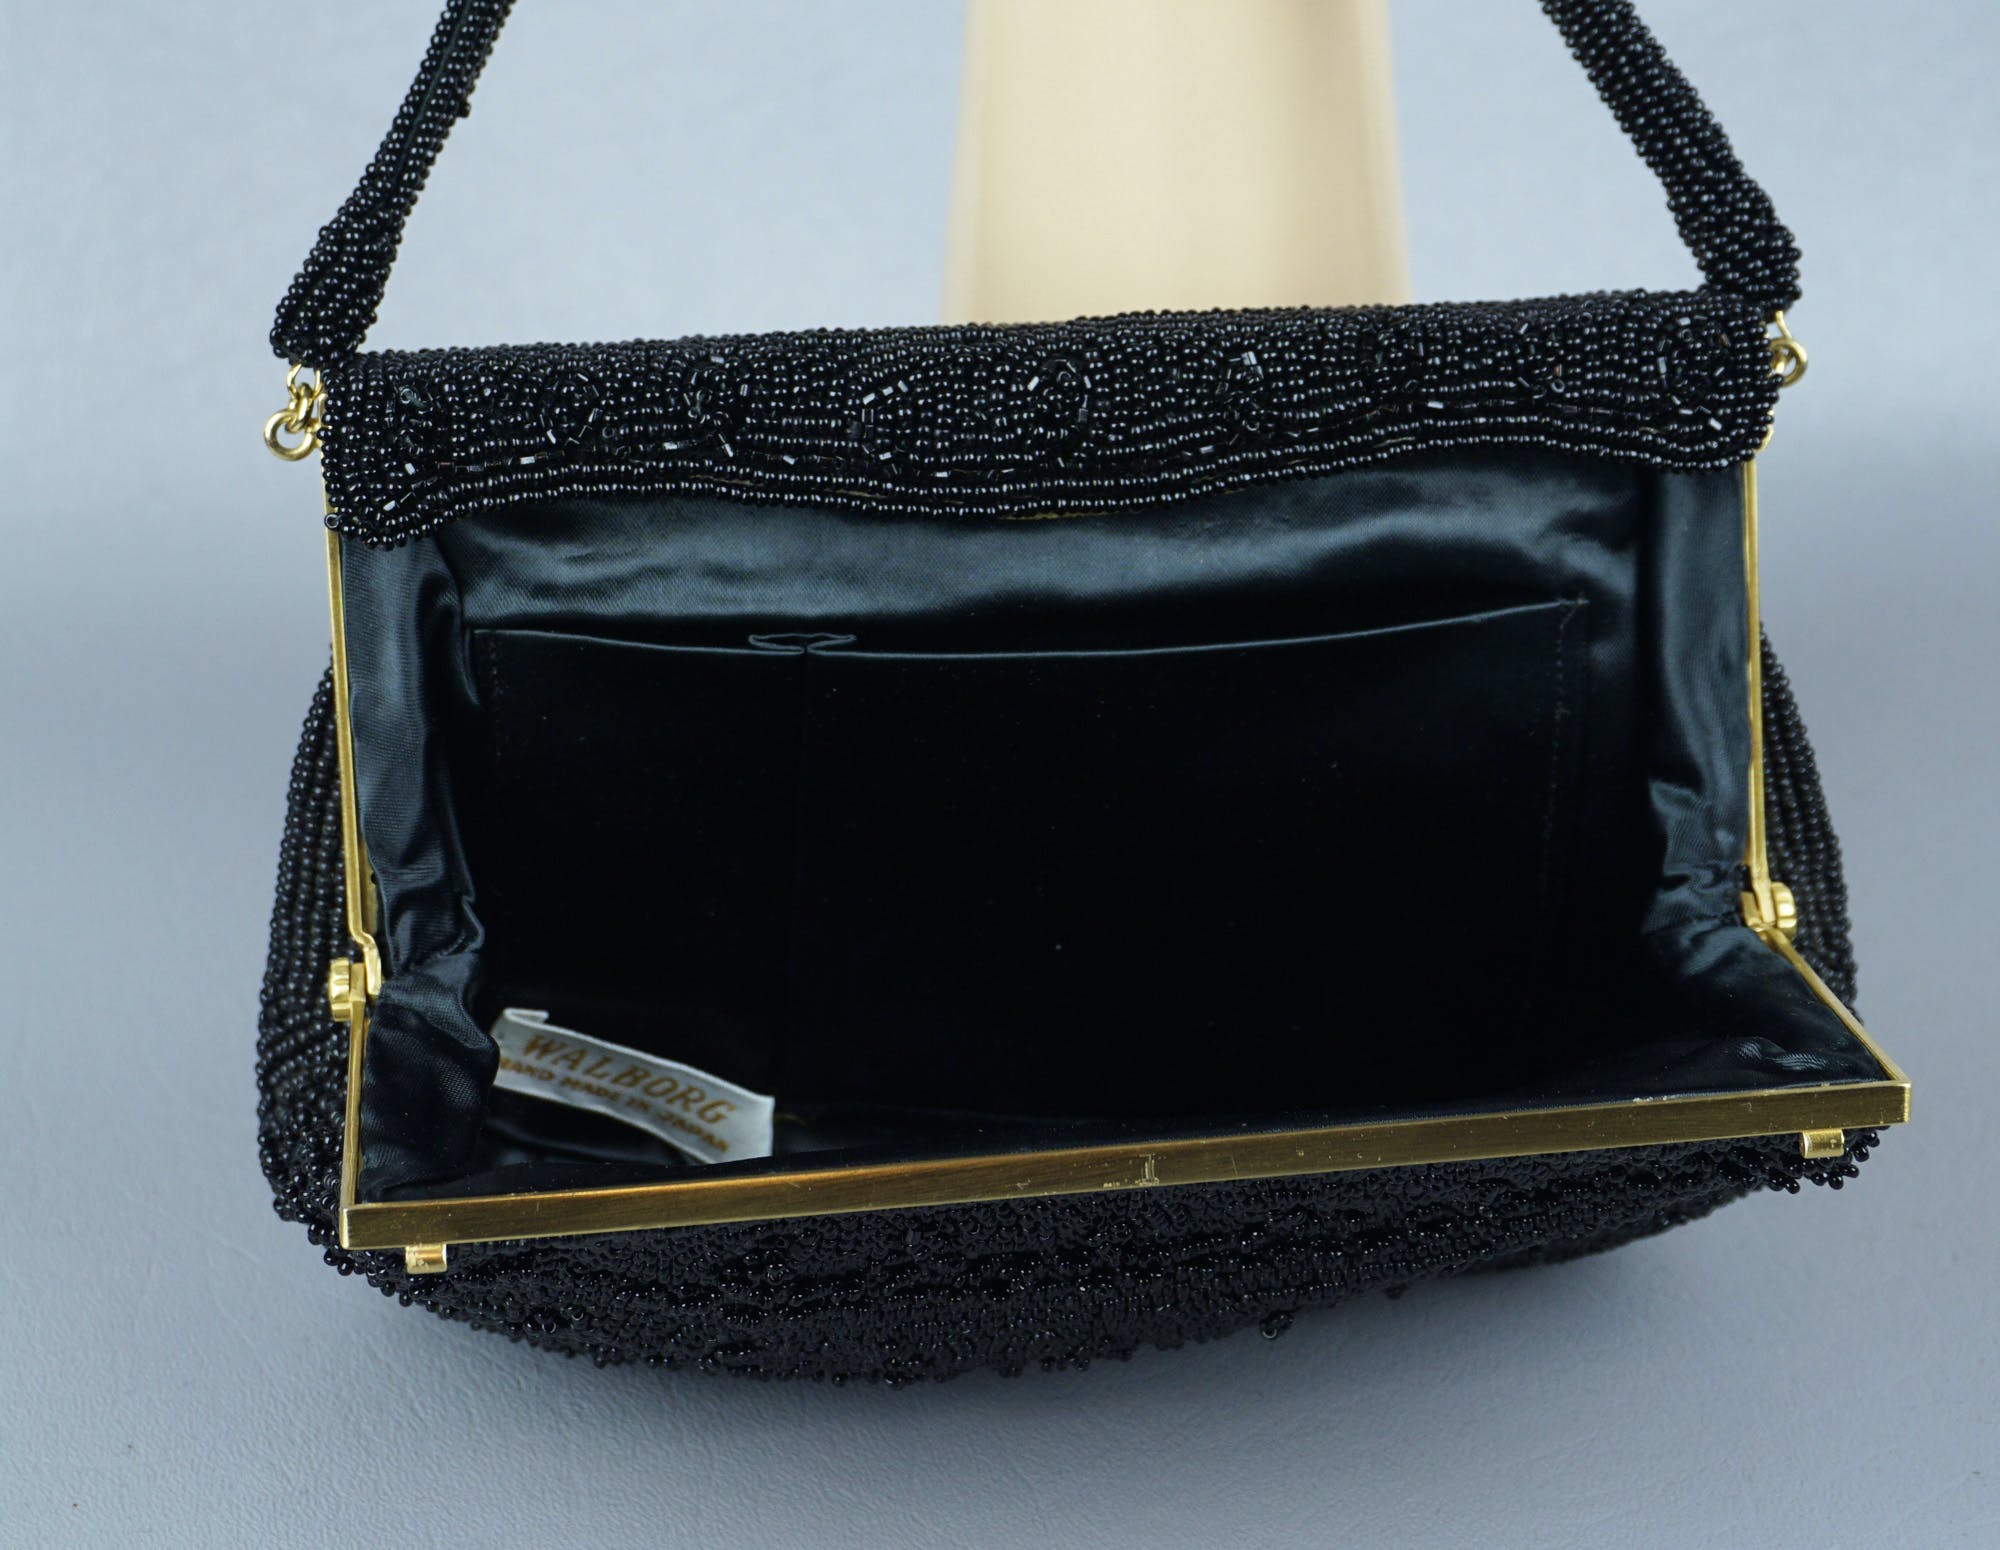 Vintage 60's Black Beaded Evening Handbag by Walborg